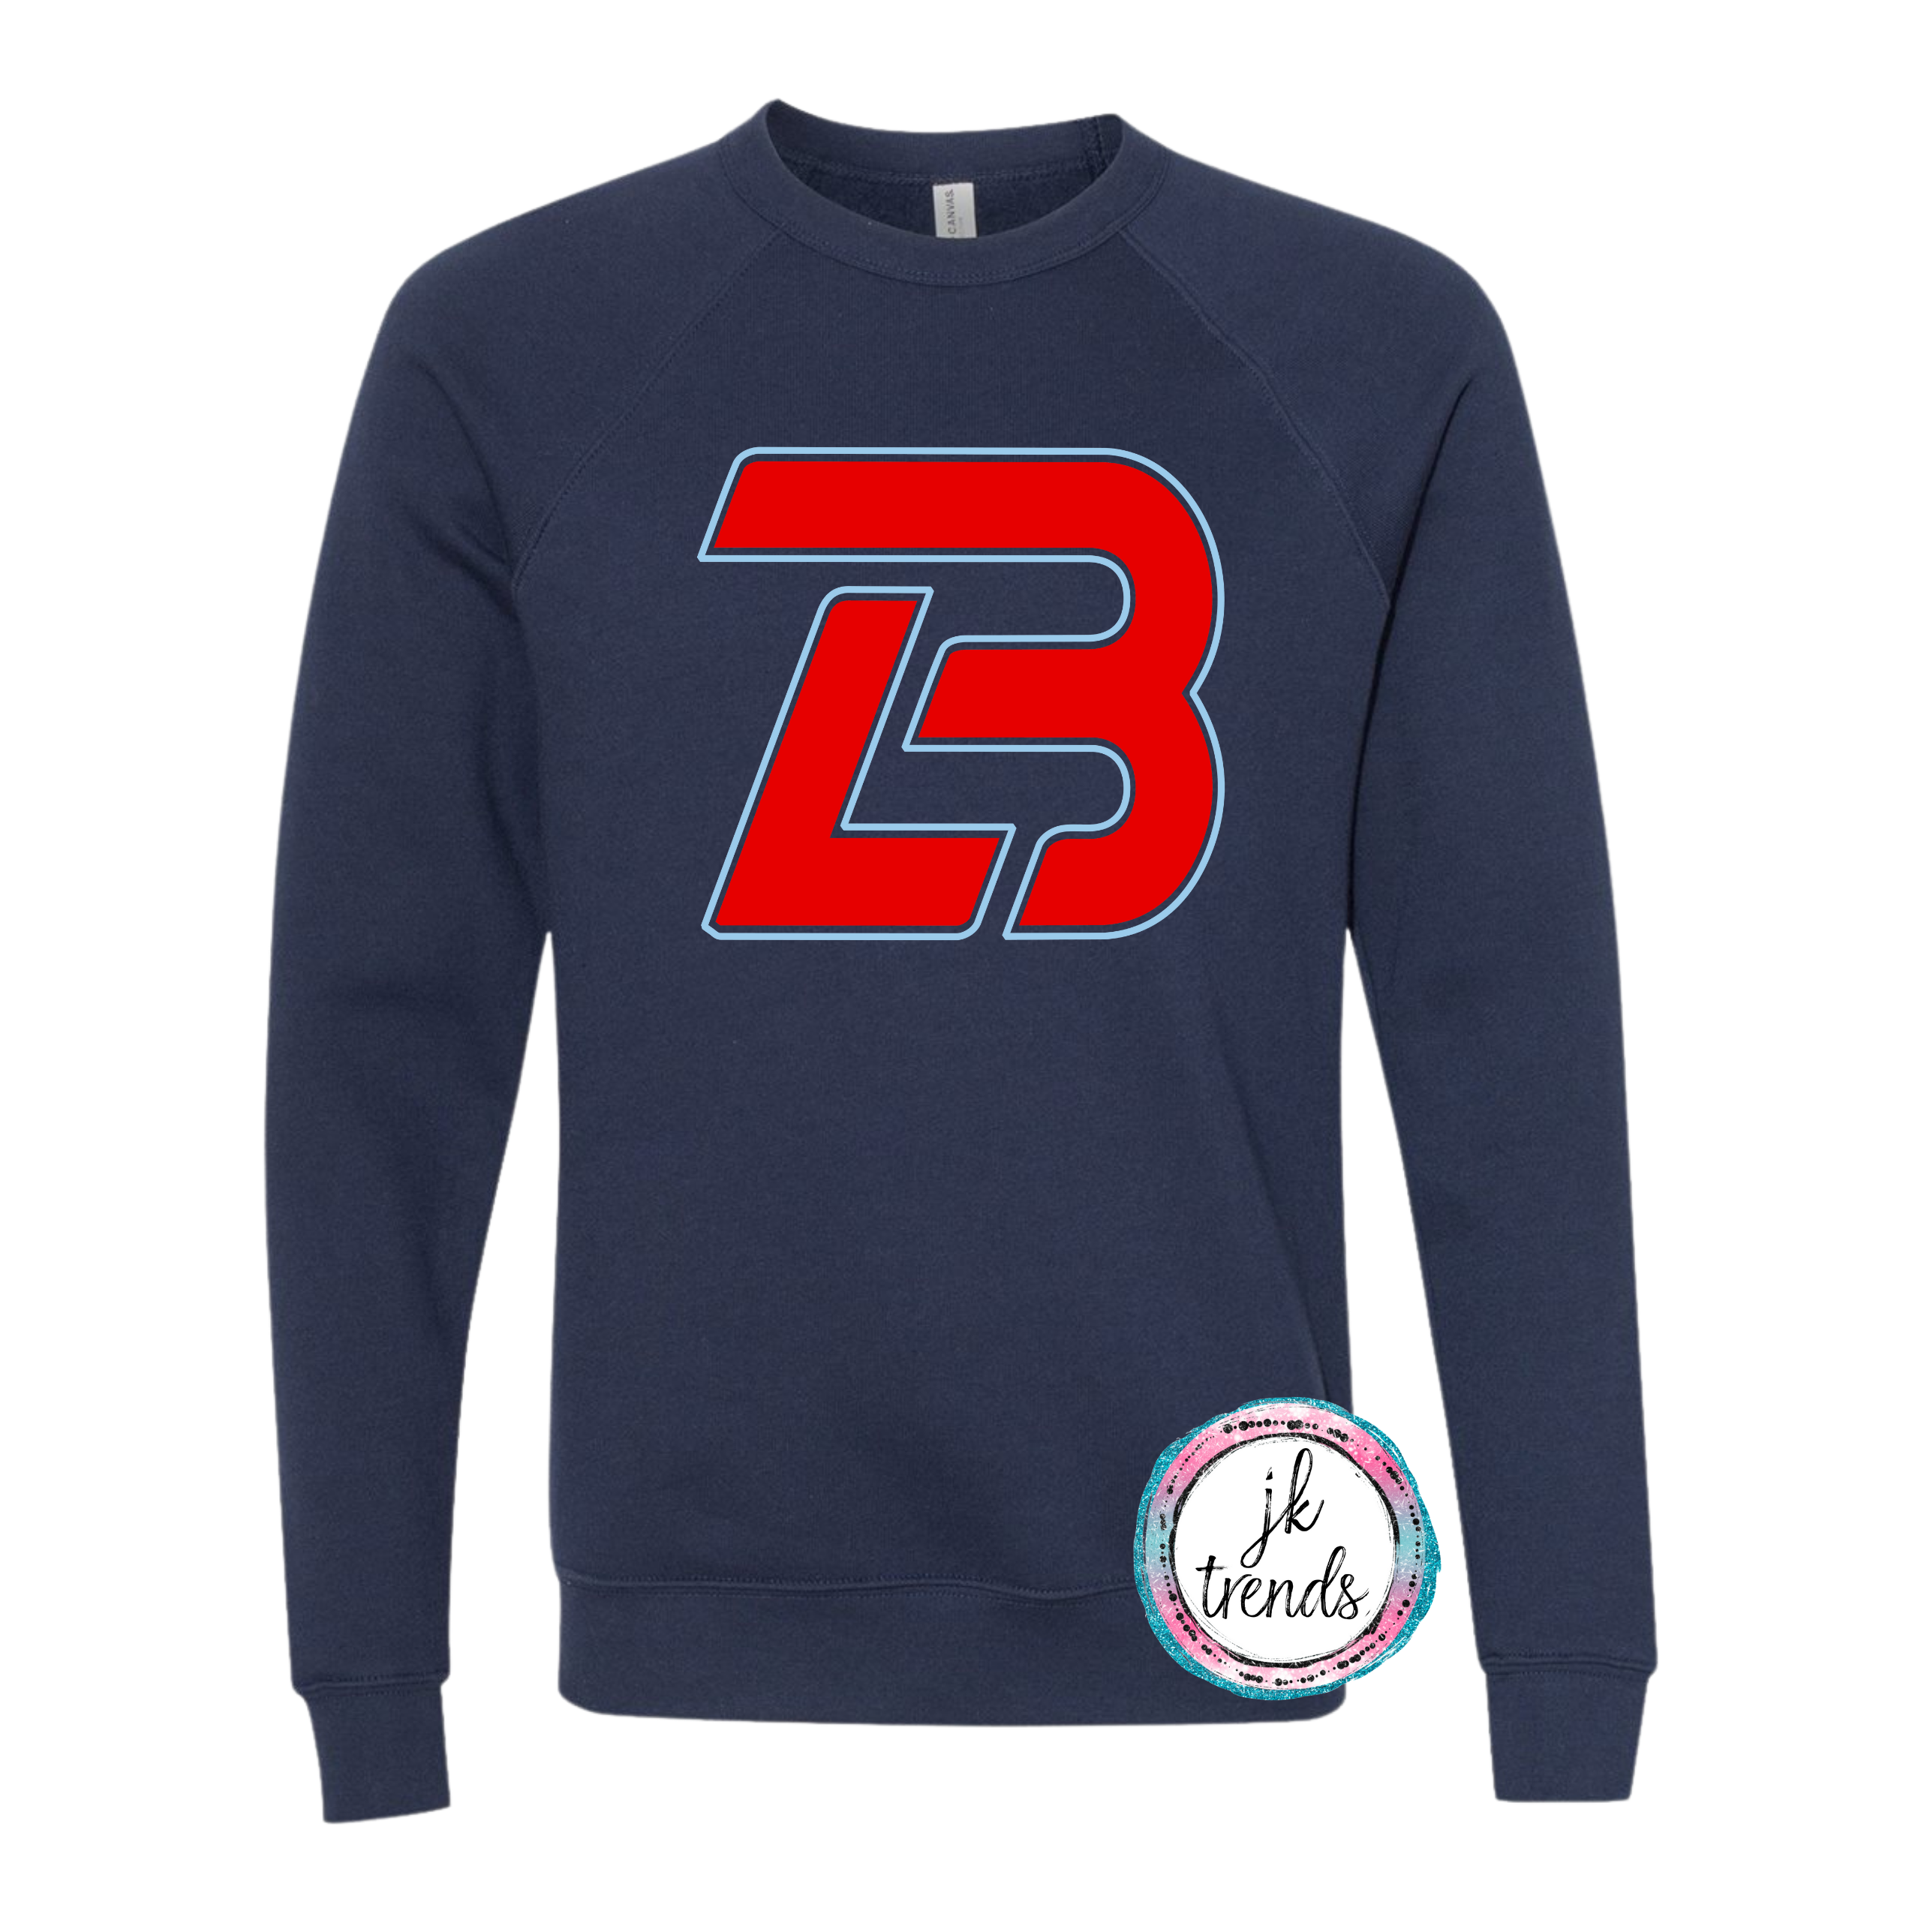 LB Logo of Lonestar Baseball Toddler/Youth/Adult Bella Canvas Sweatshirt